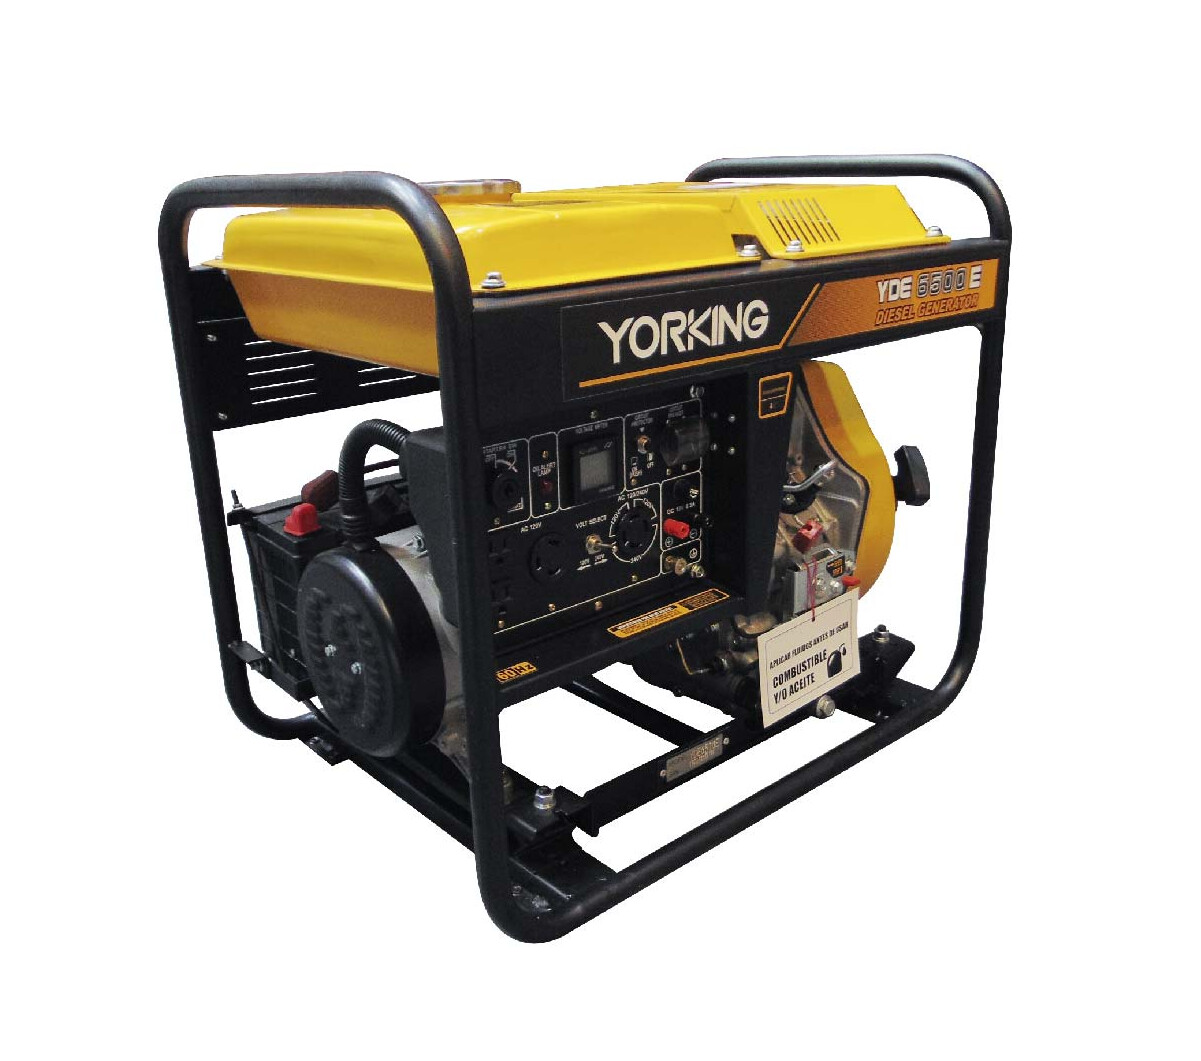 Yorking YDE6500E- 5 kW planta electrica portatil diesel abierta